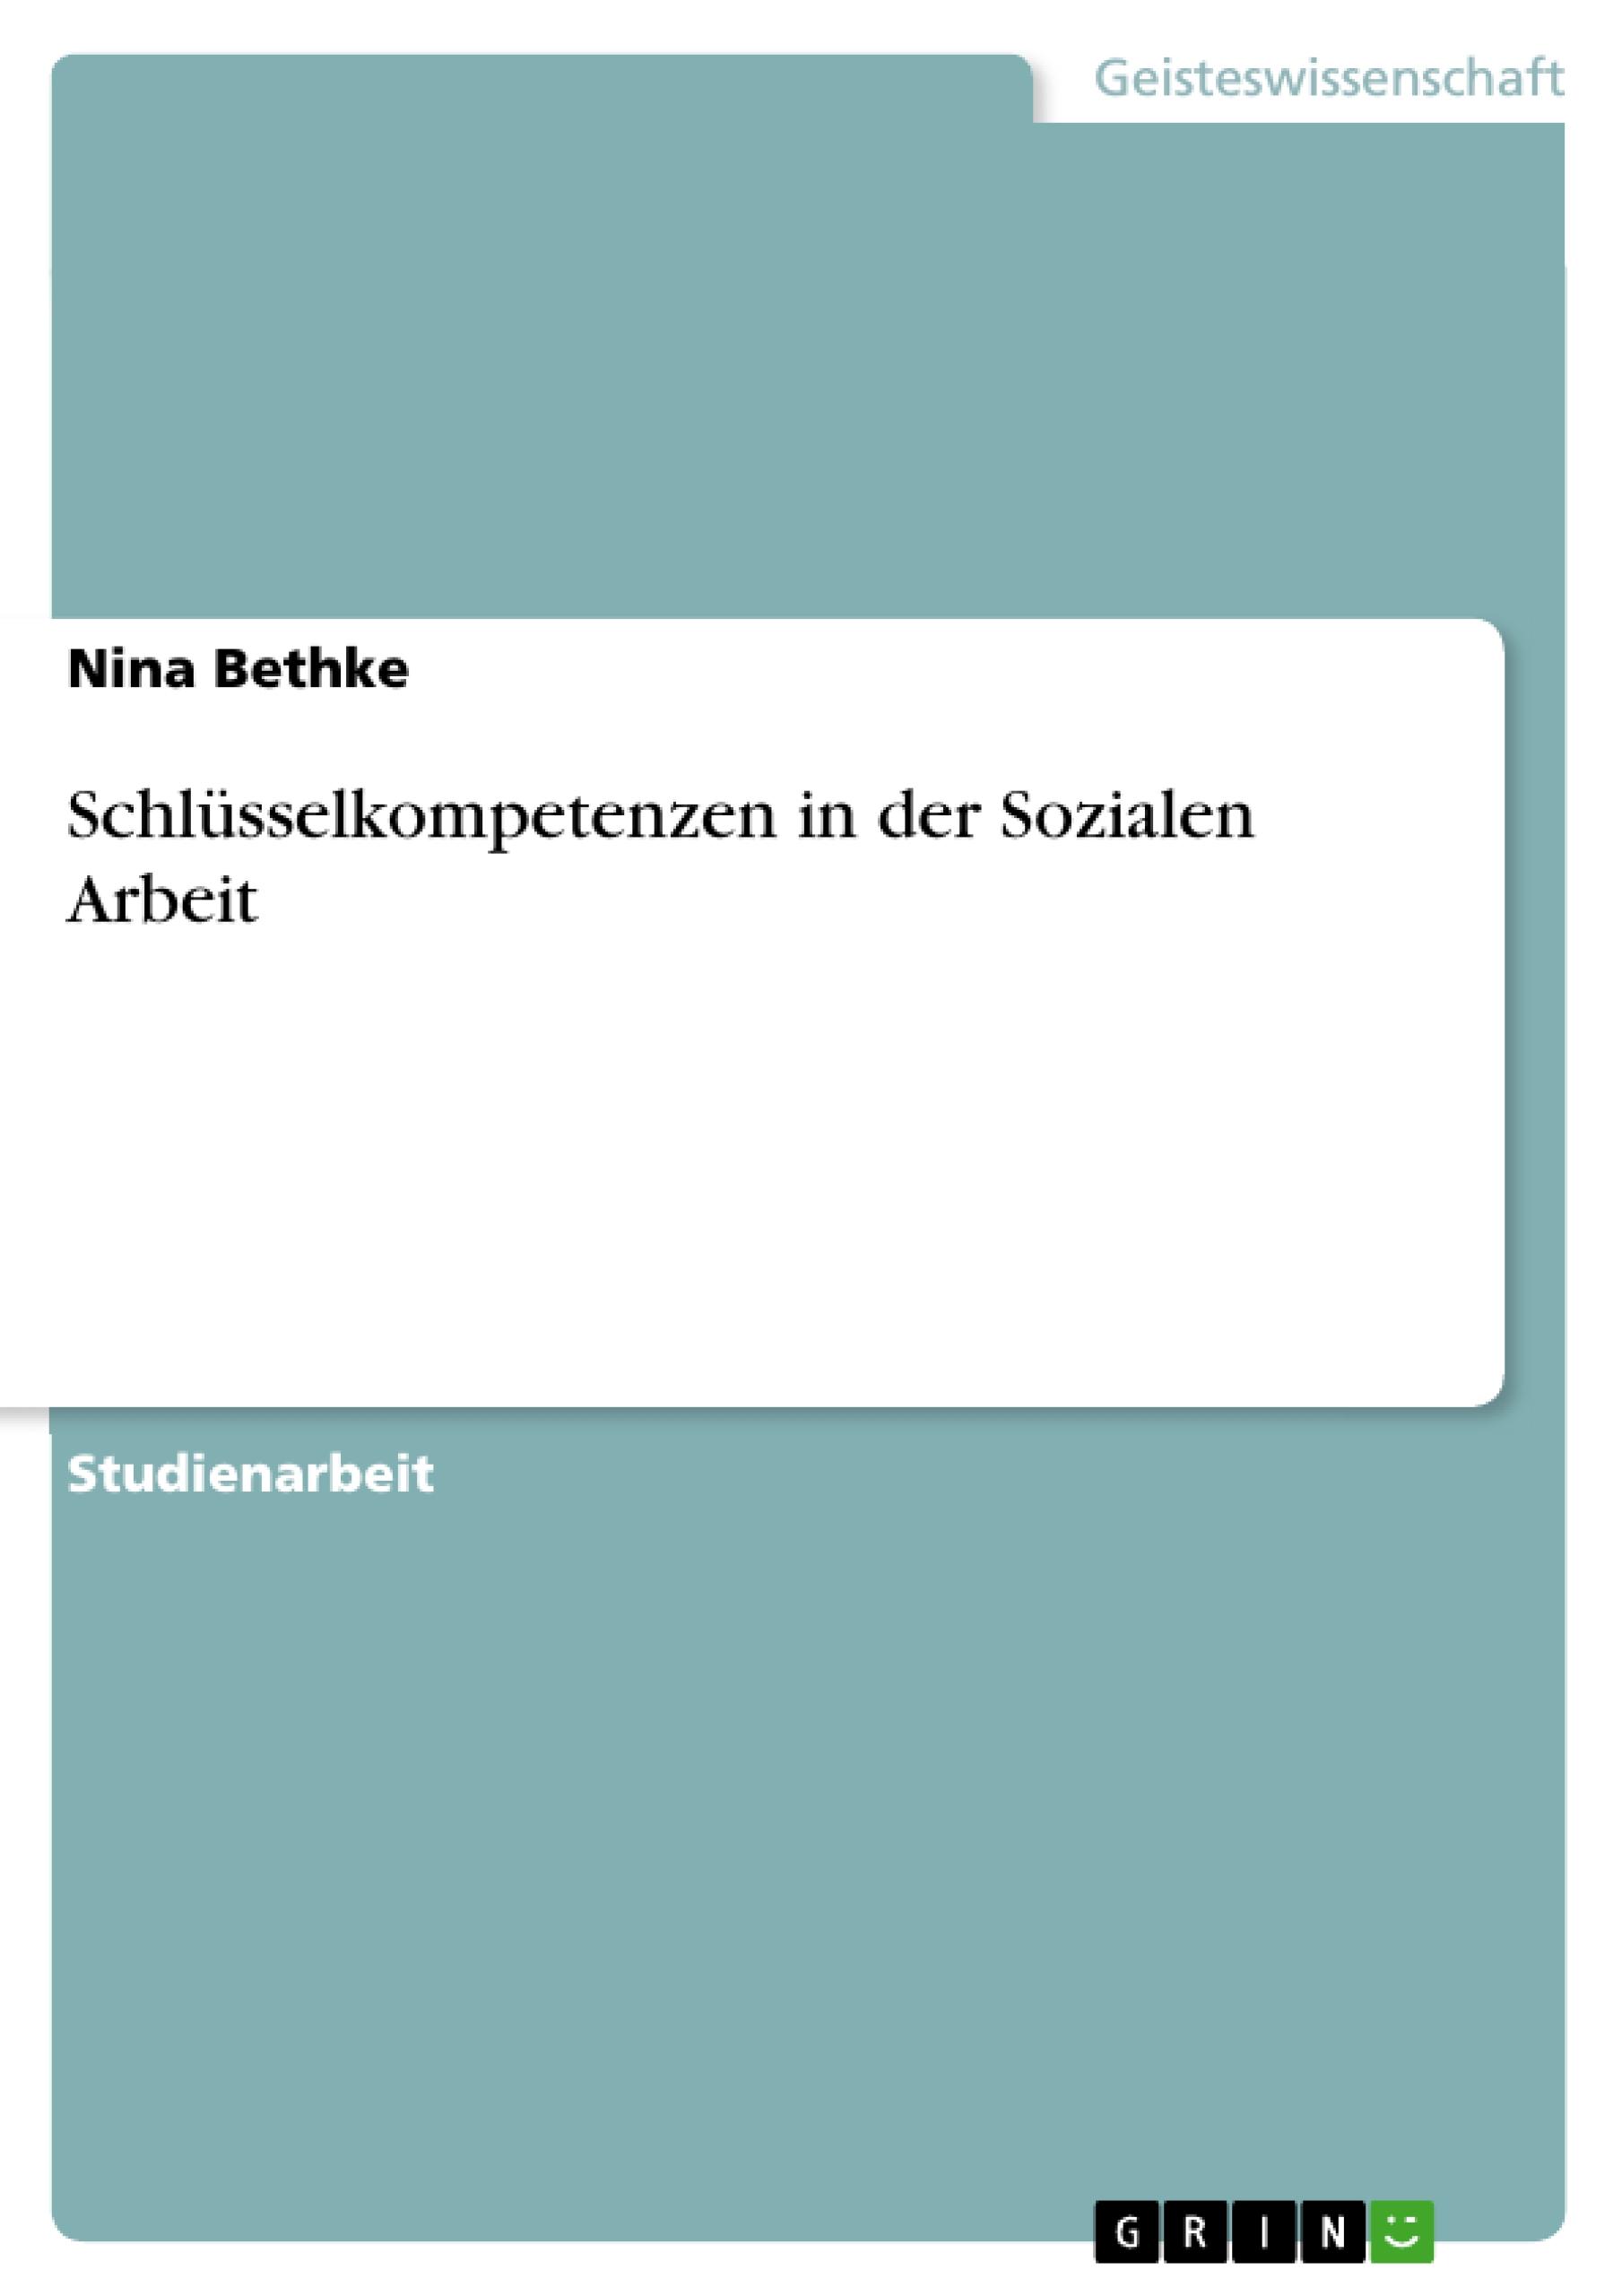 Schluesselkompetenzen in der Sozialen Arbeit - Bethke, Nina